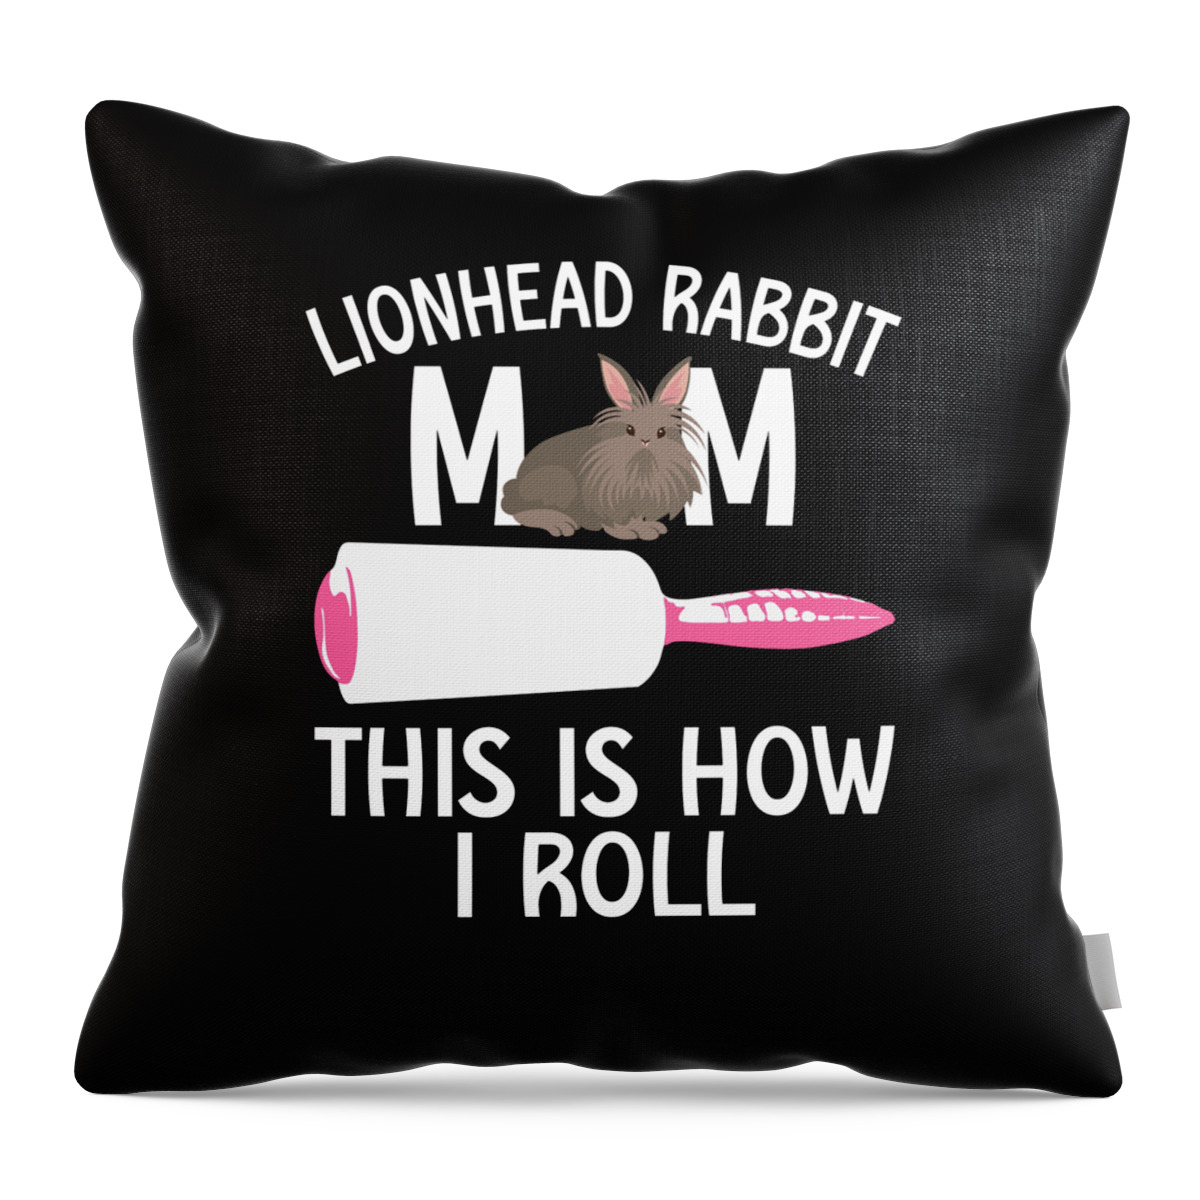 Lionhead Rabbit Throw Pillow featuring the digital art Funny Lionhead Rabbit Mom by Me